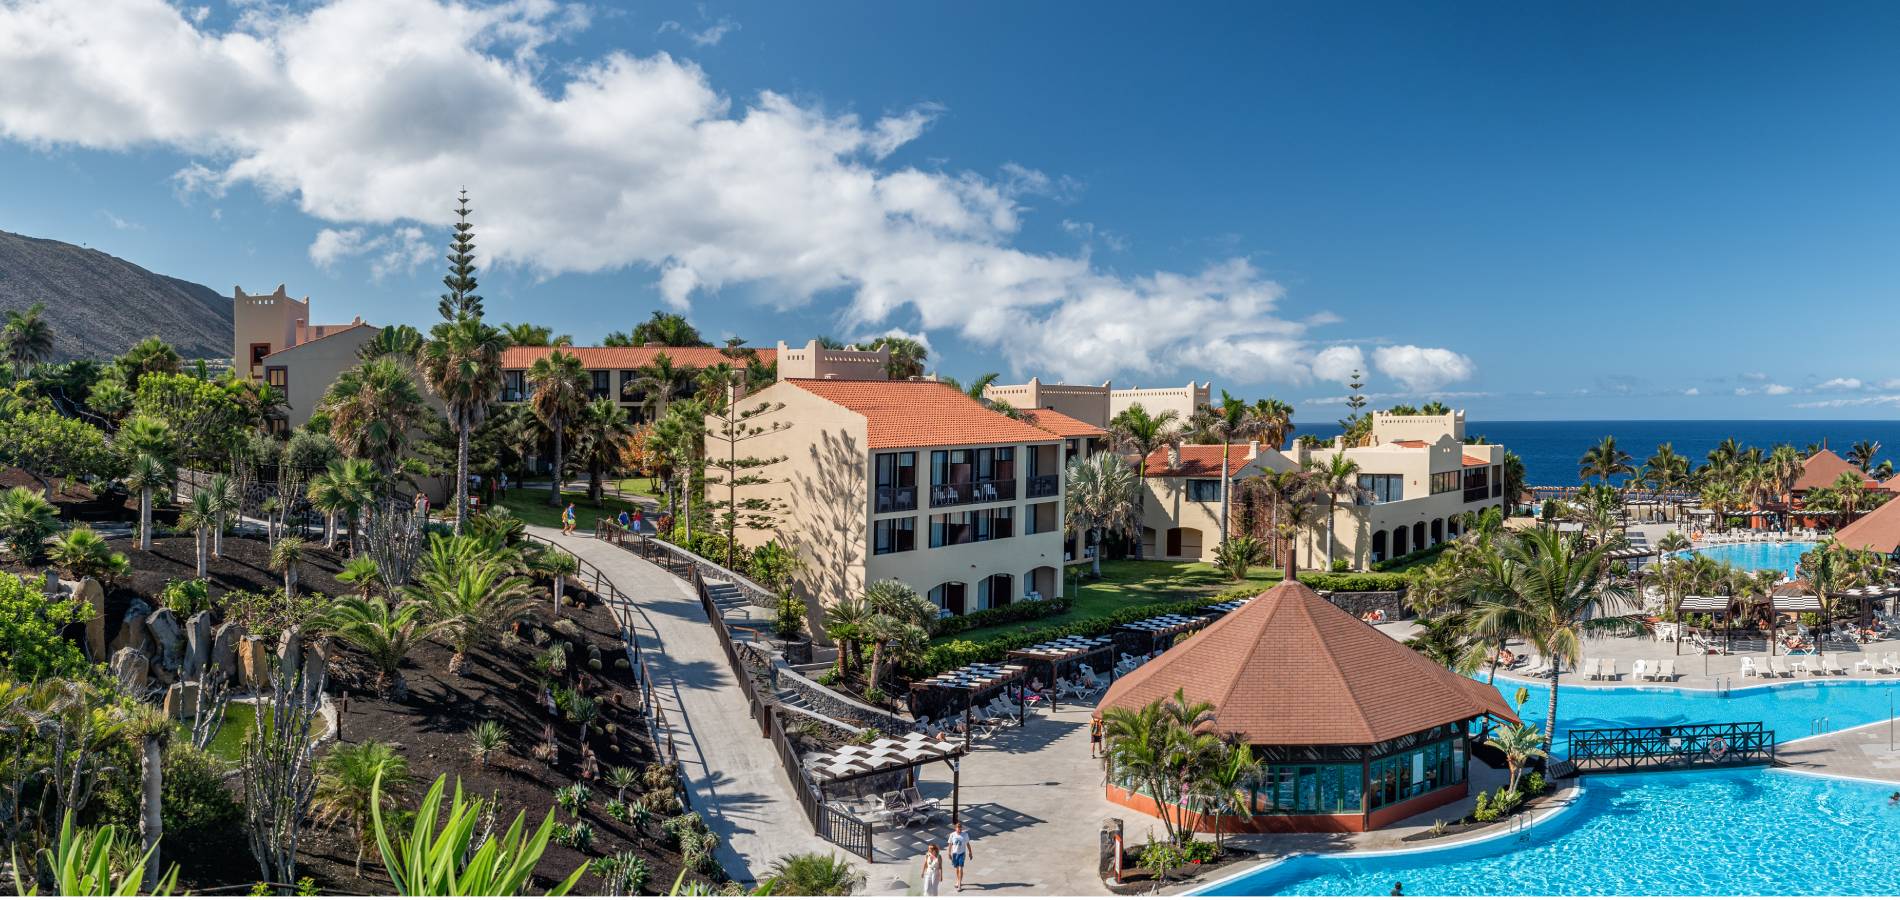 Location of Hotel La Palma Princess